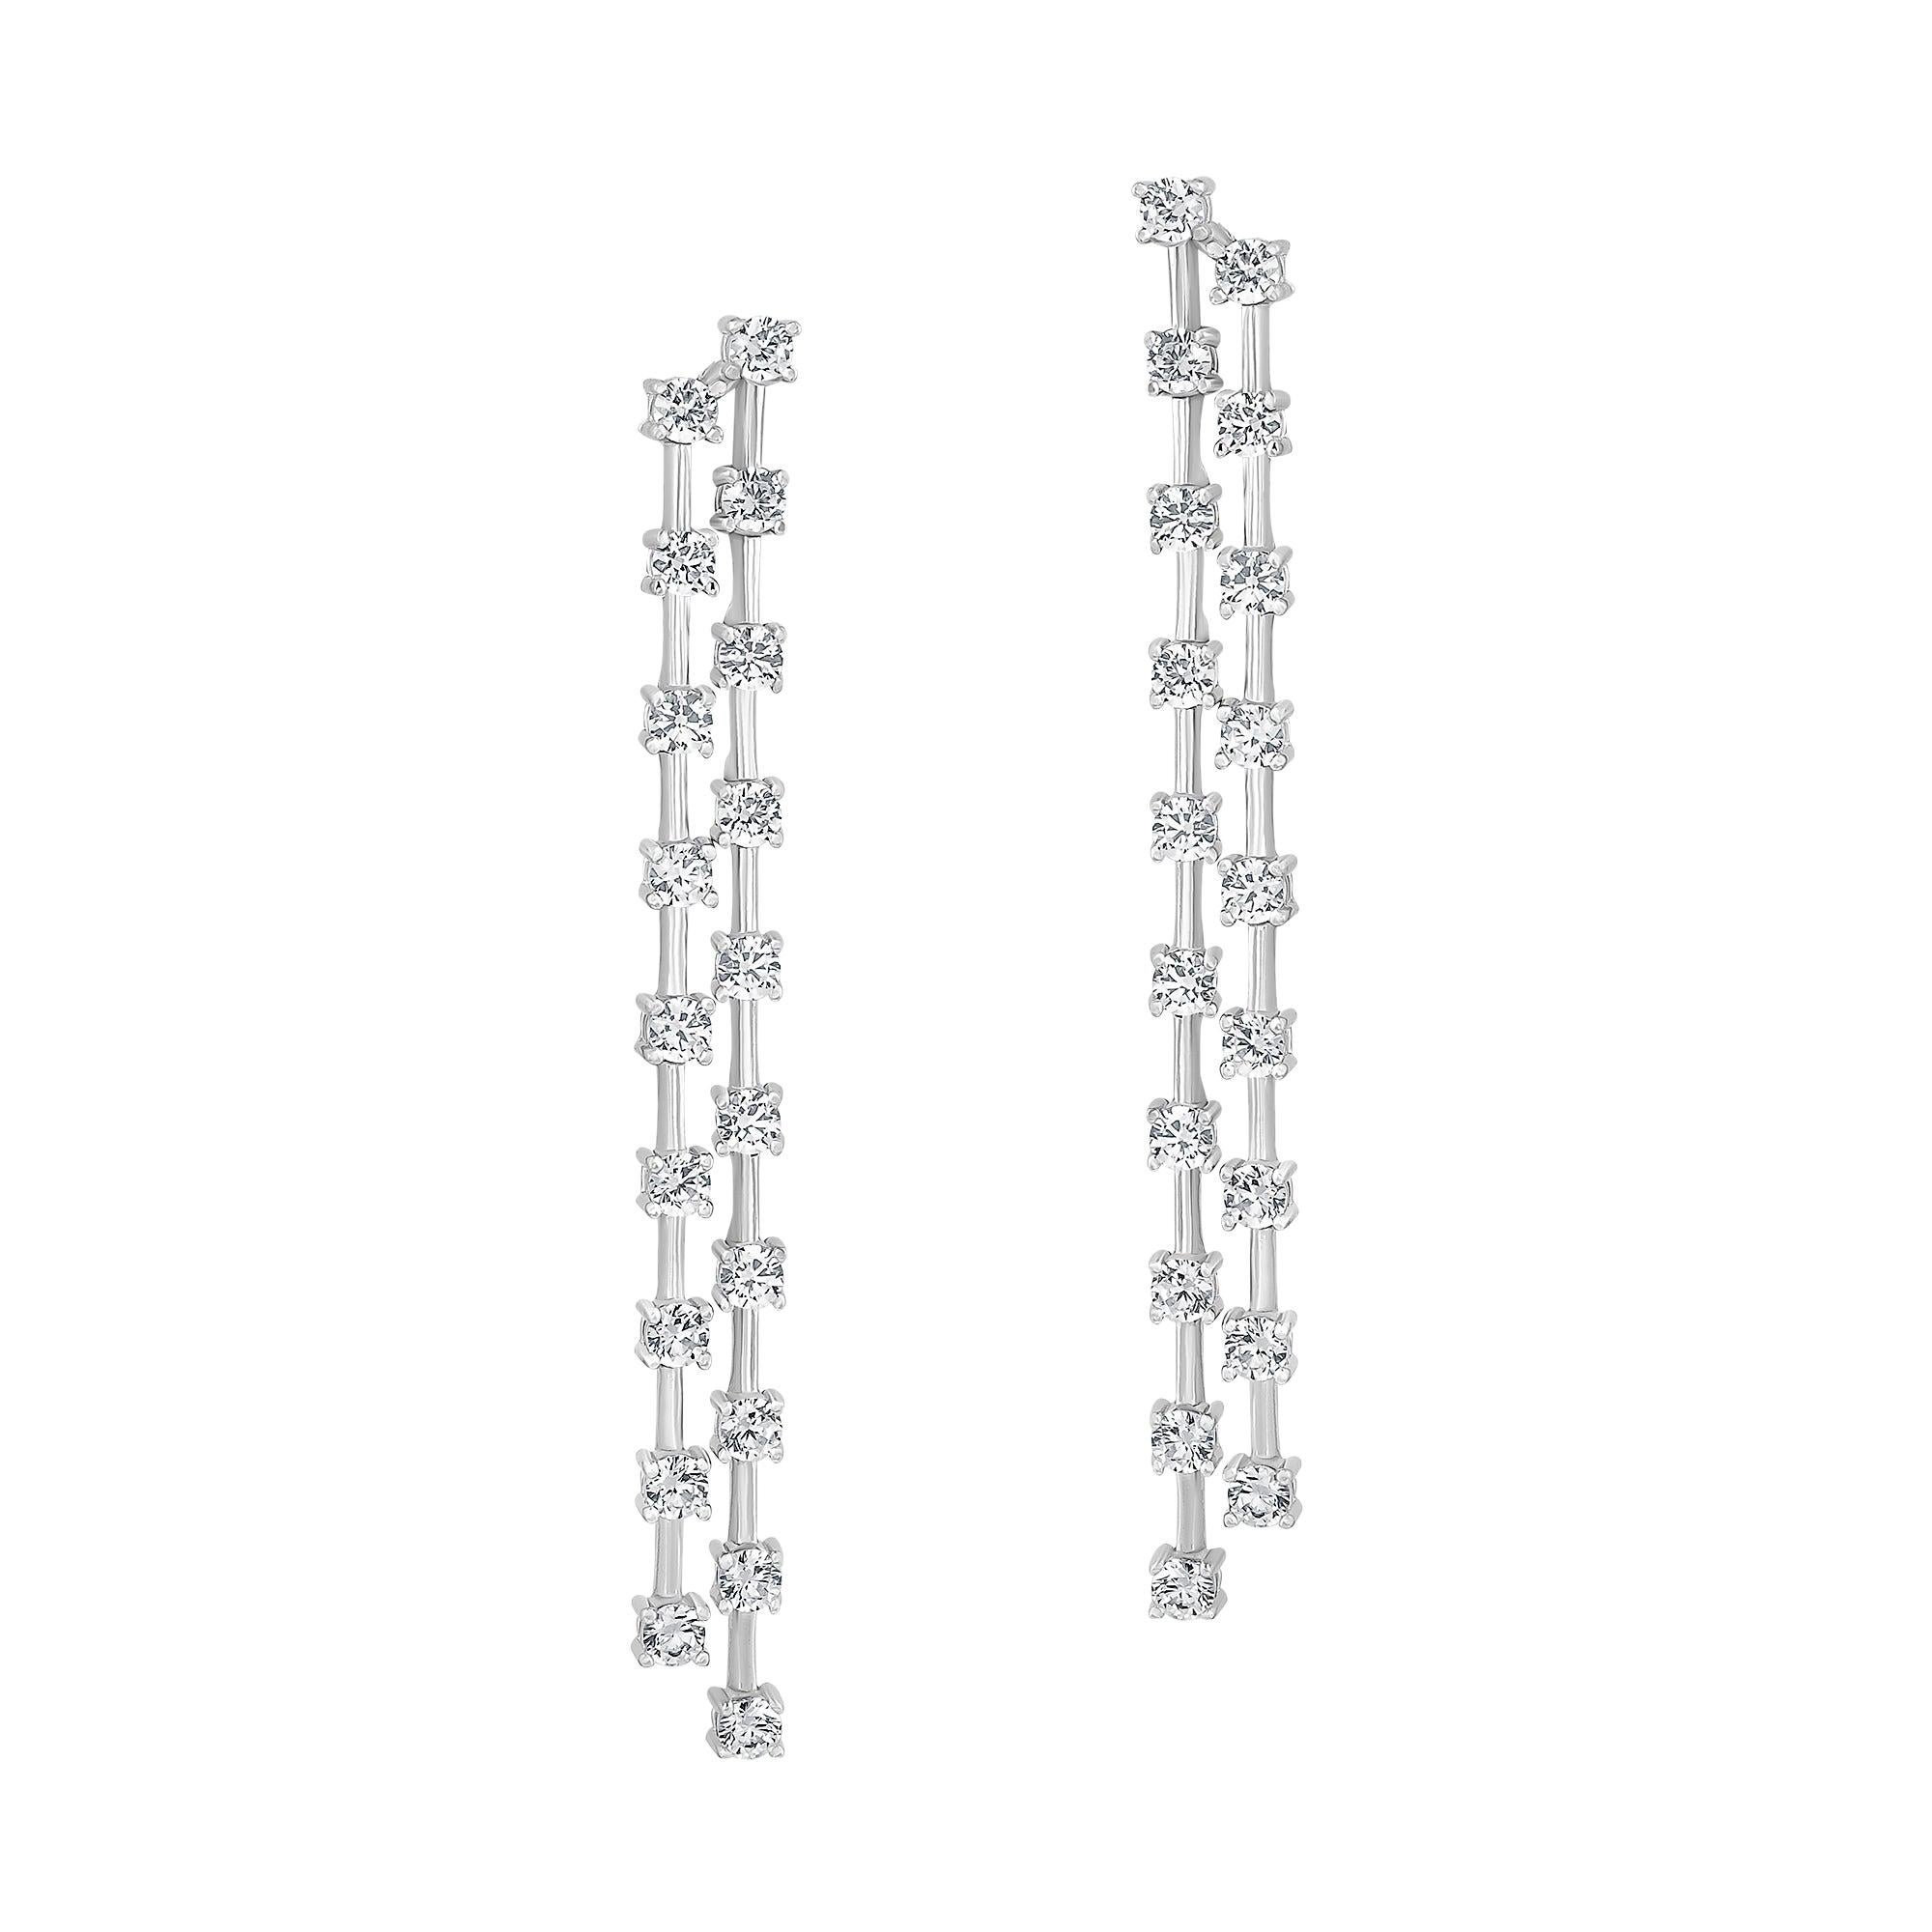 Emilio Jewelry 2.70 Carat Diamond Earring